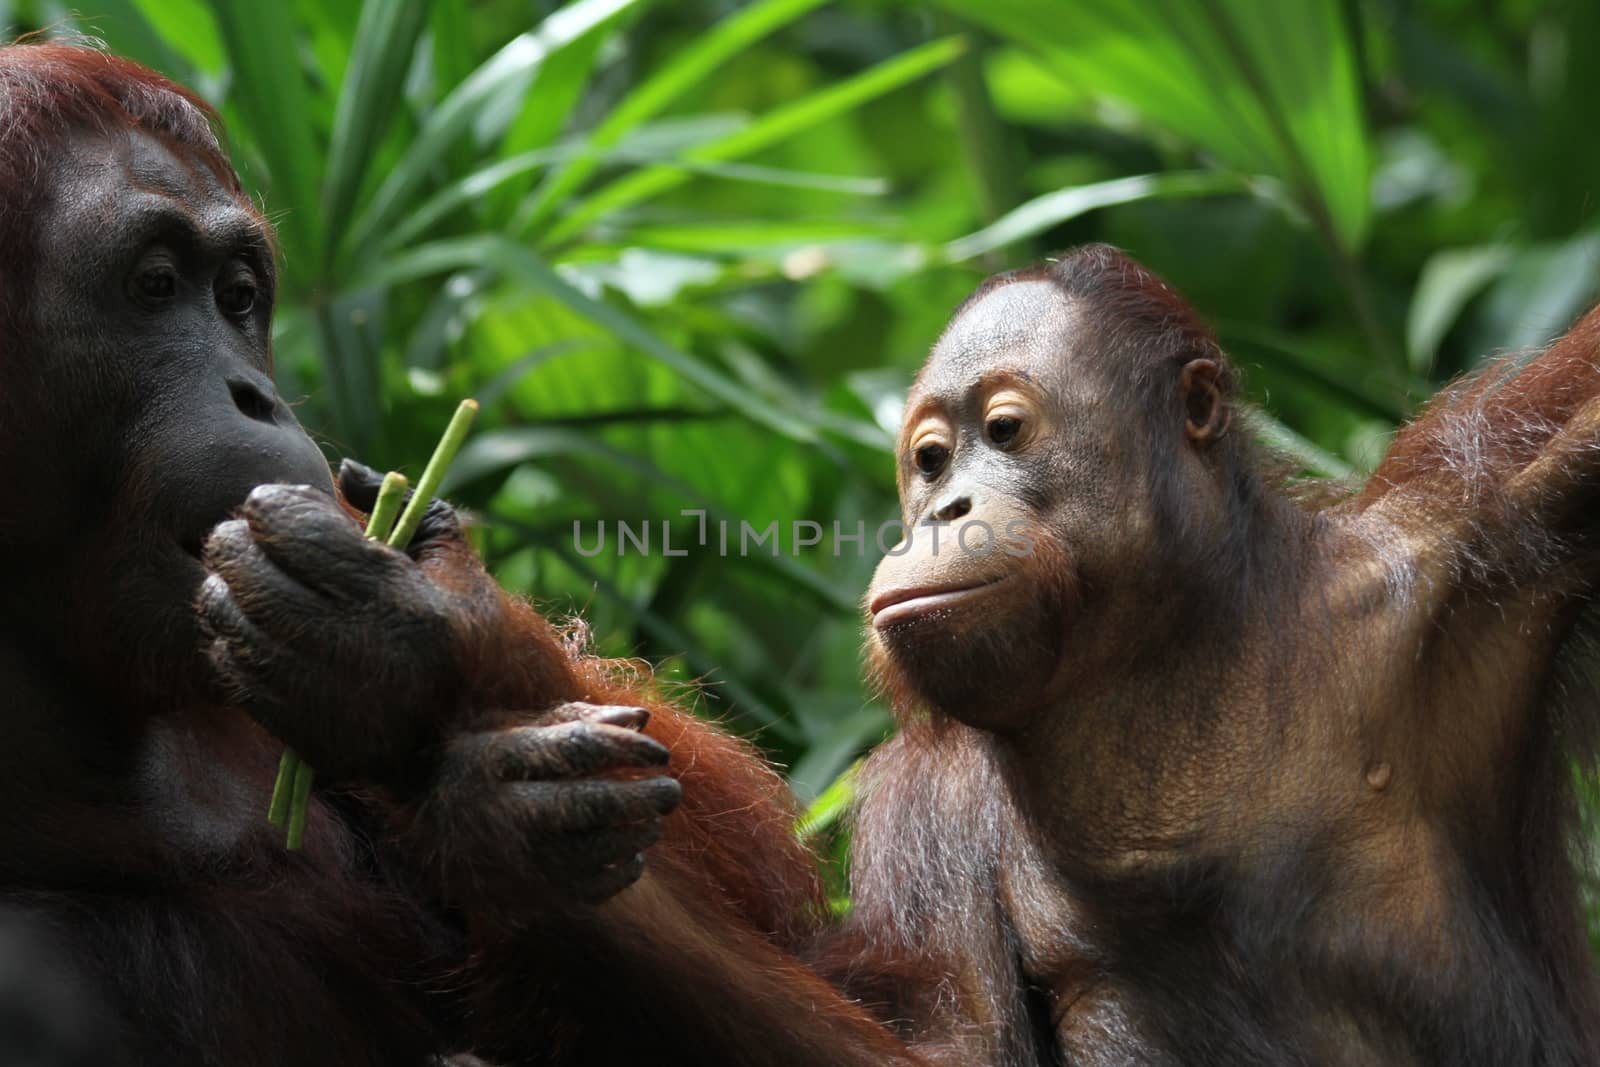 A wild life shot of orangutans in captivity